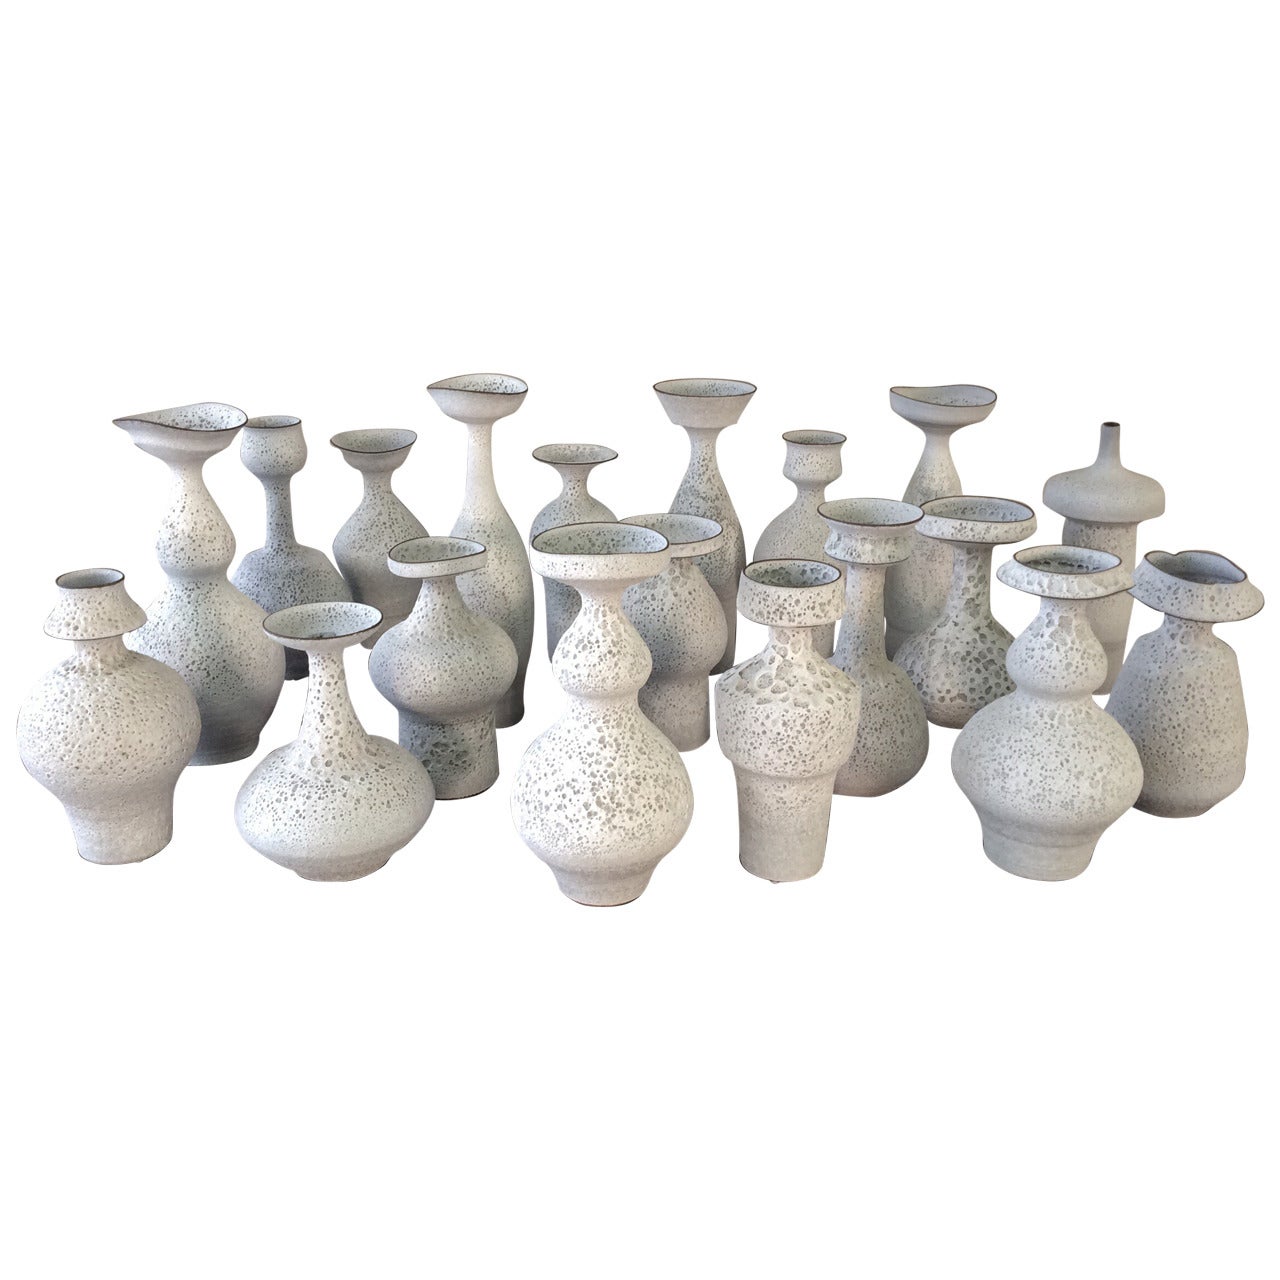 Masterful Studio Pottery Vases in a White Crater Glaze by Jeremy Briddell, 2015